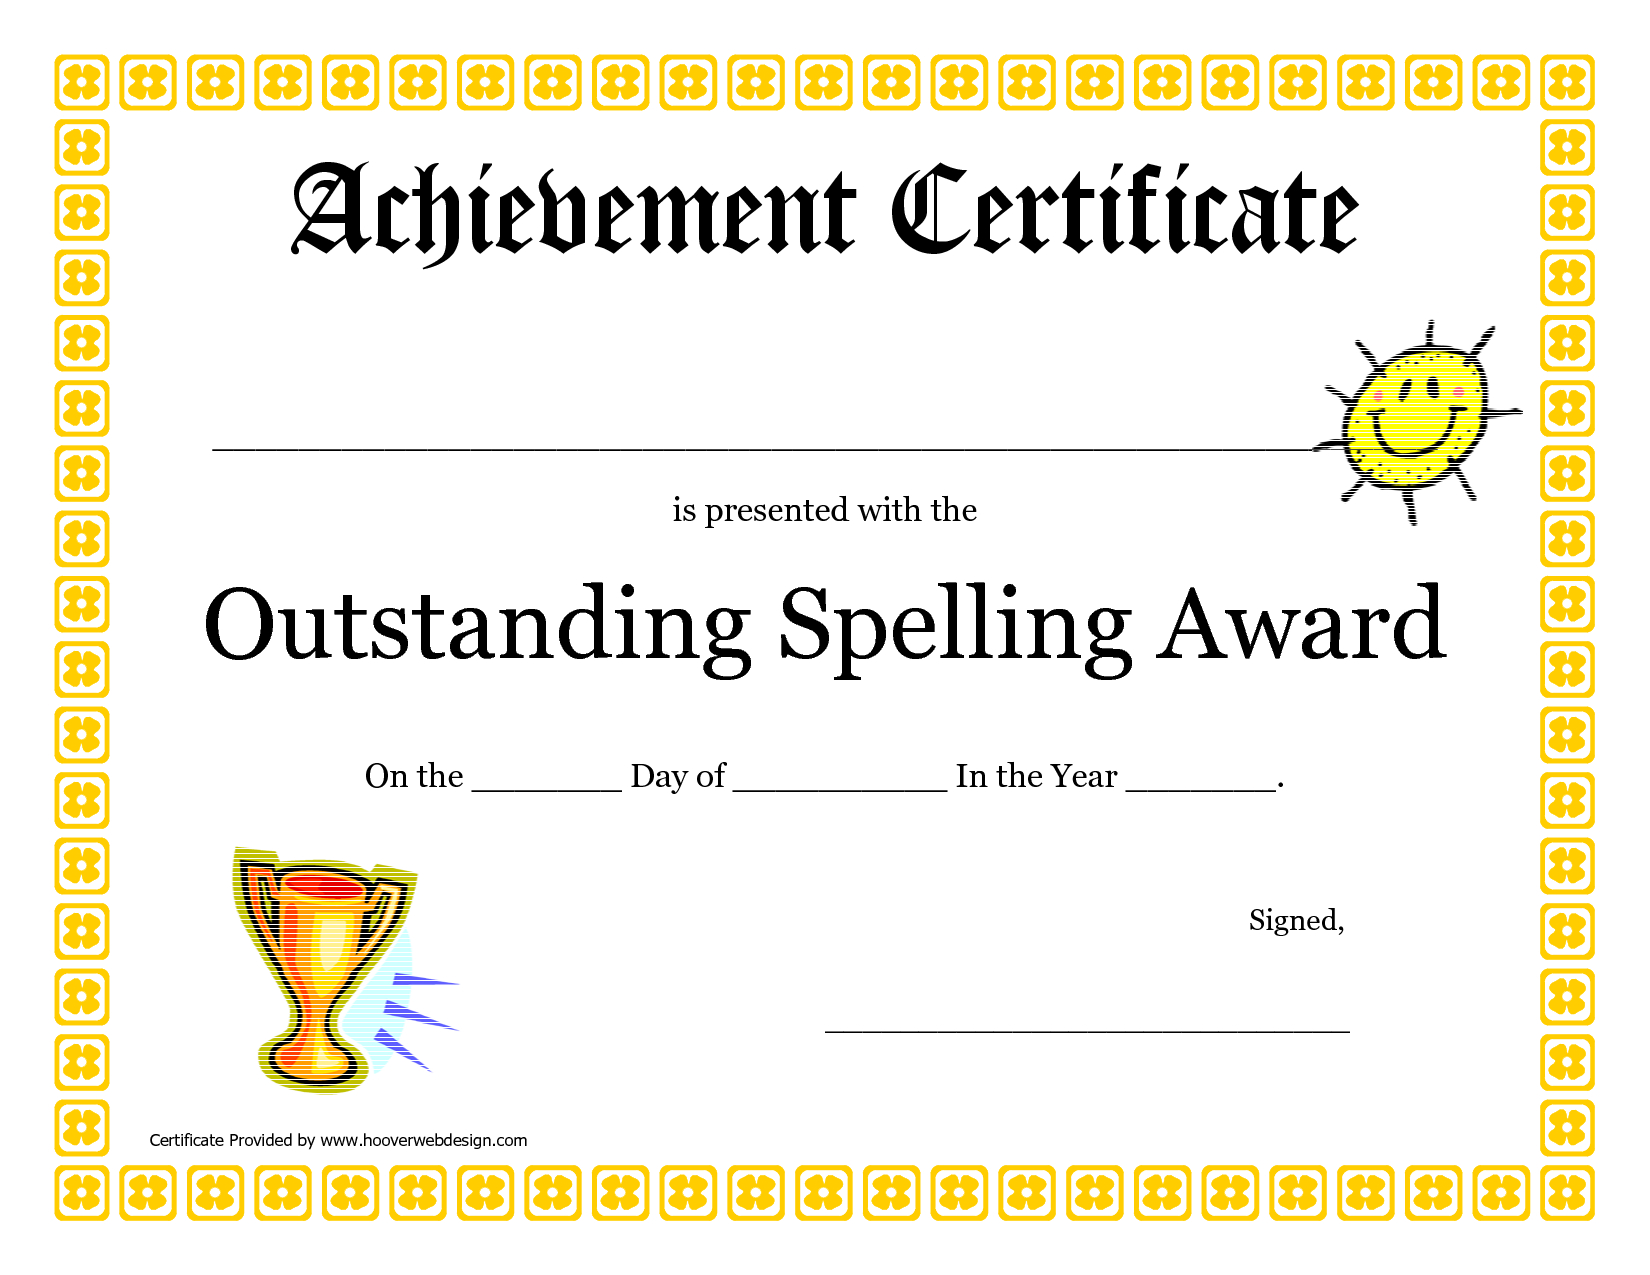 Outstanding Spelling Award Printable Certificate Pdf Picture For Spelling Bee Award Certificate Template